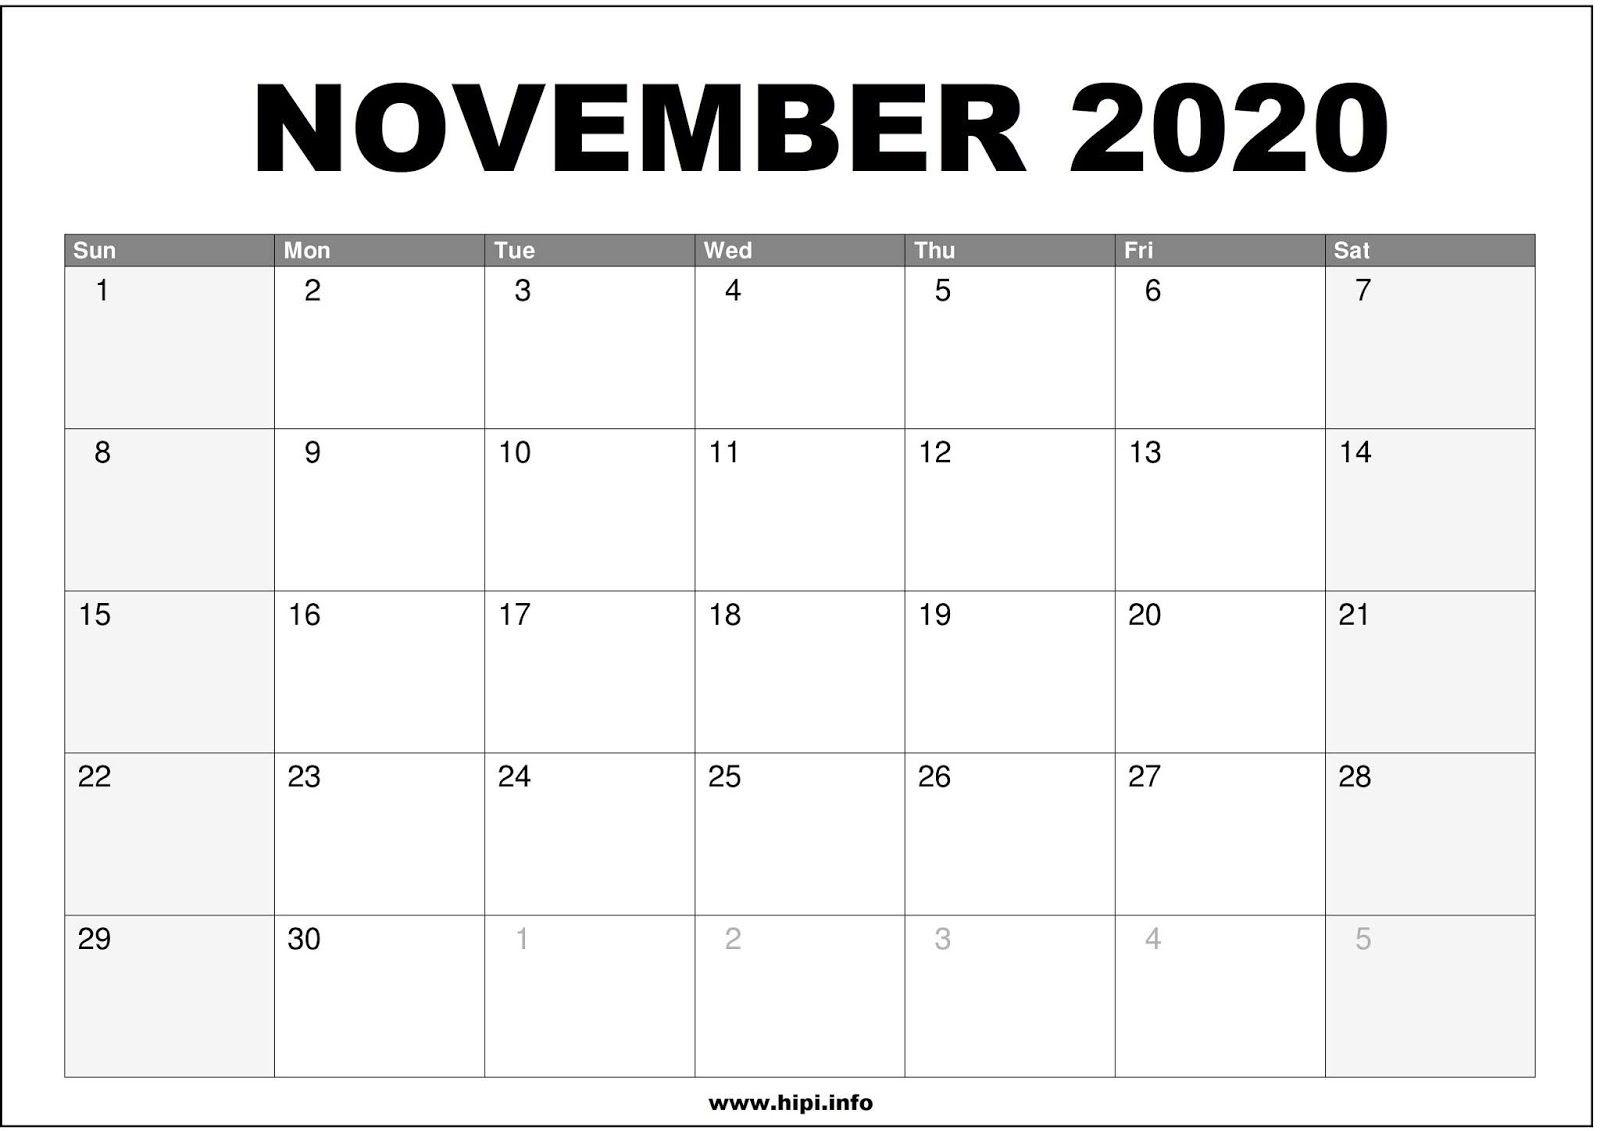 November 2020 Calendar Wallpapers   Top Free November 2020